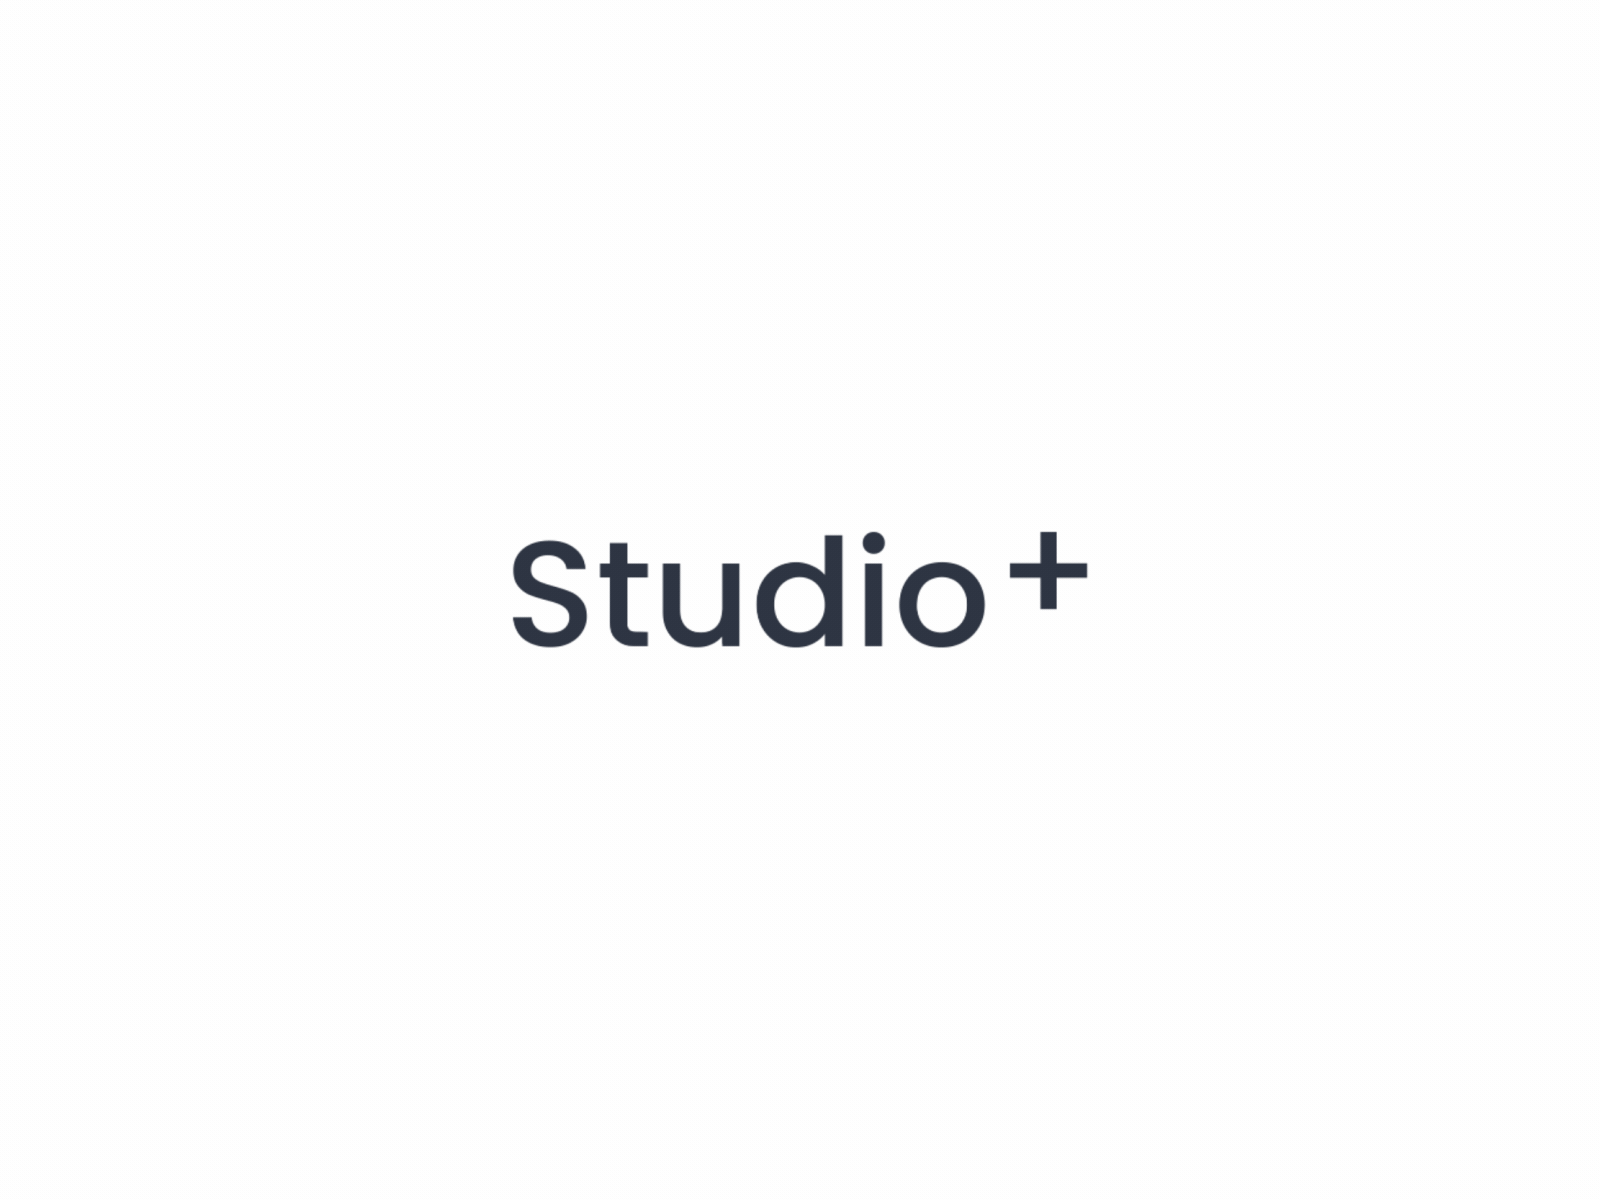 Studio+ Logo animation